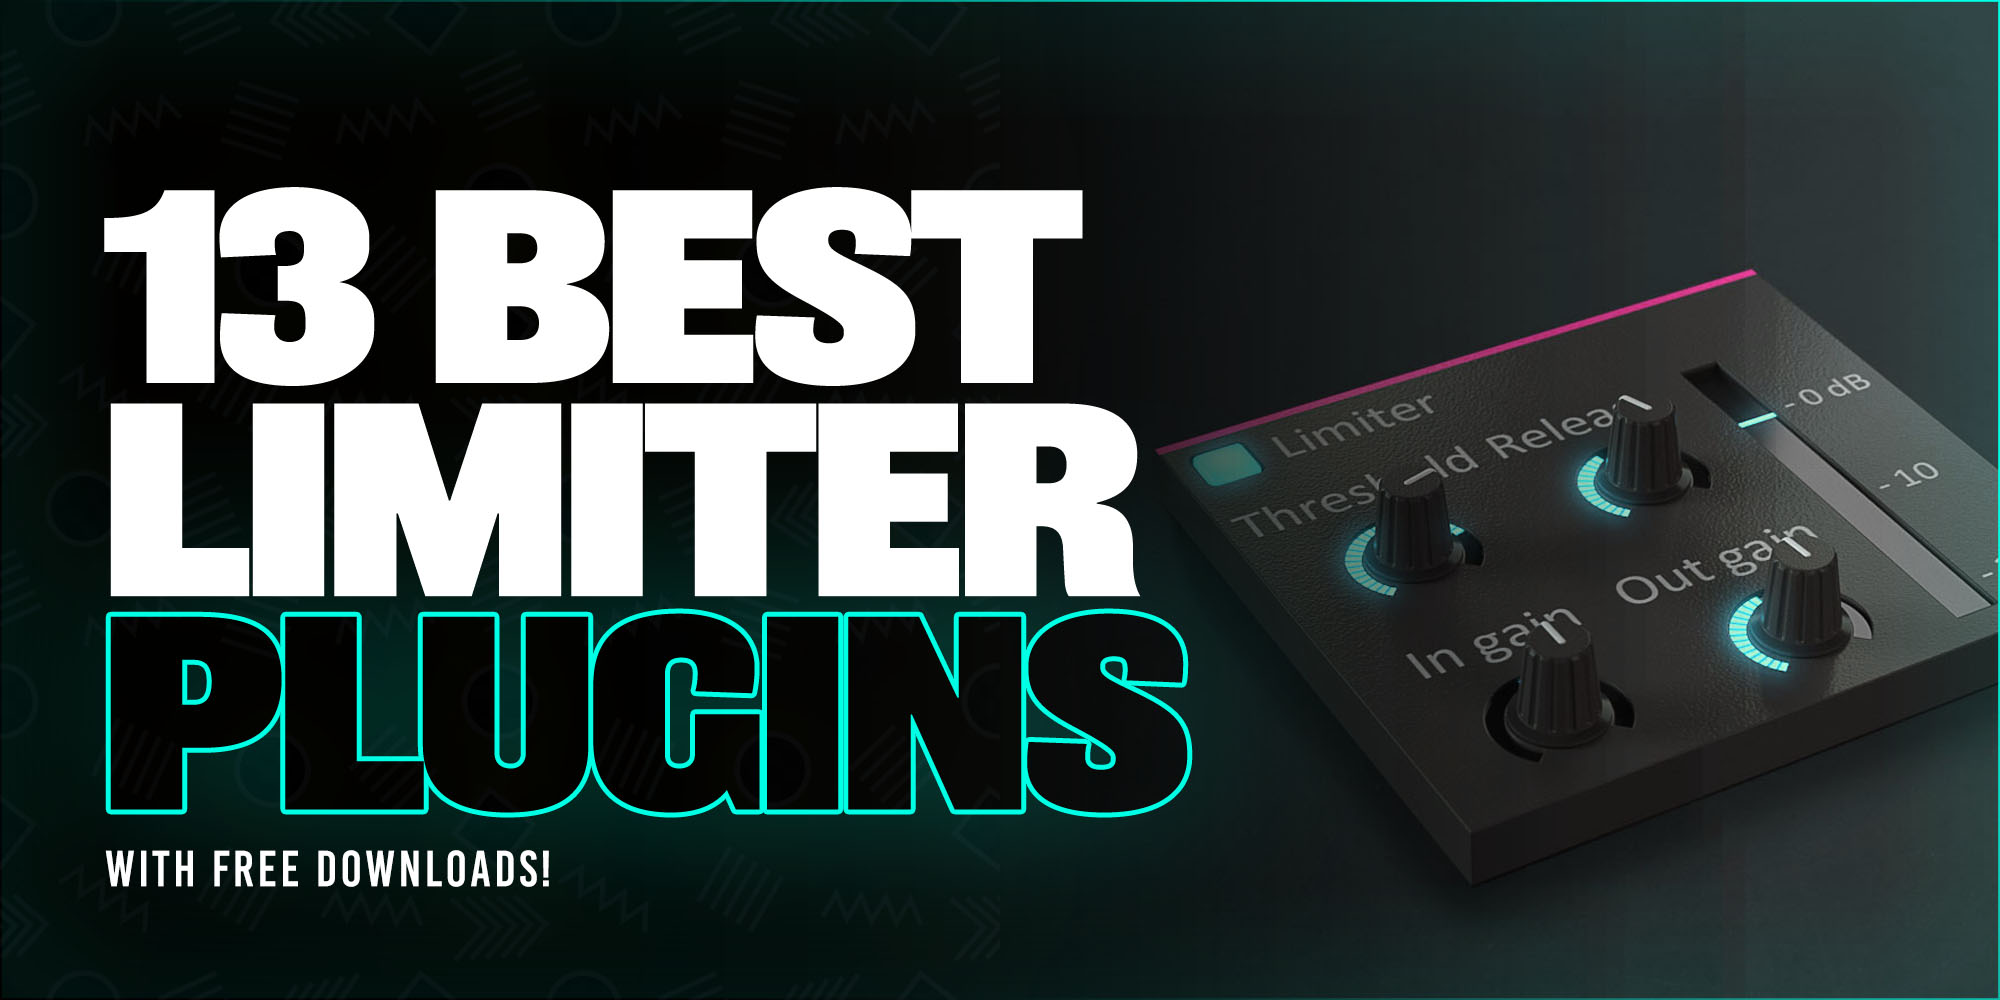 13 Best Limiter Plugins To Download